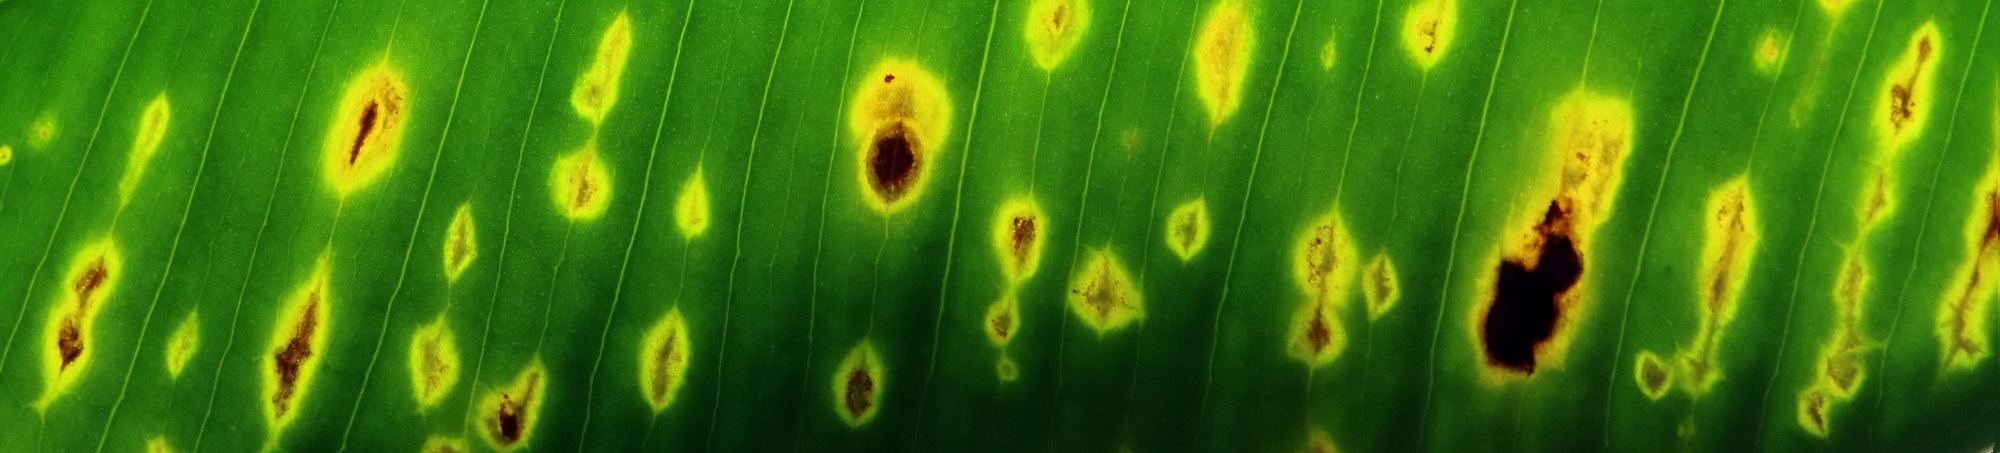 Growers Network’s Disease Profile: Septoria Leaf Spot - Growers Network